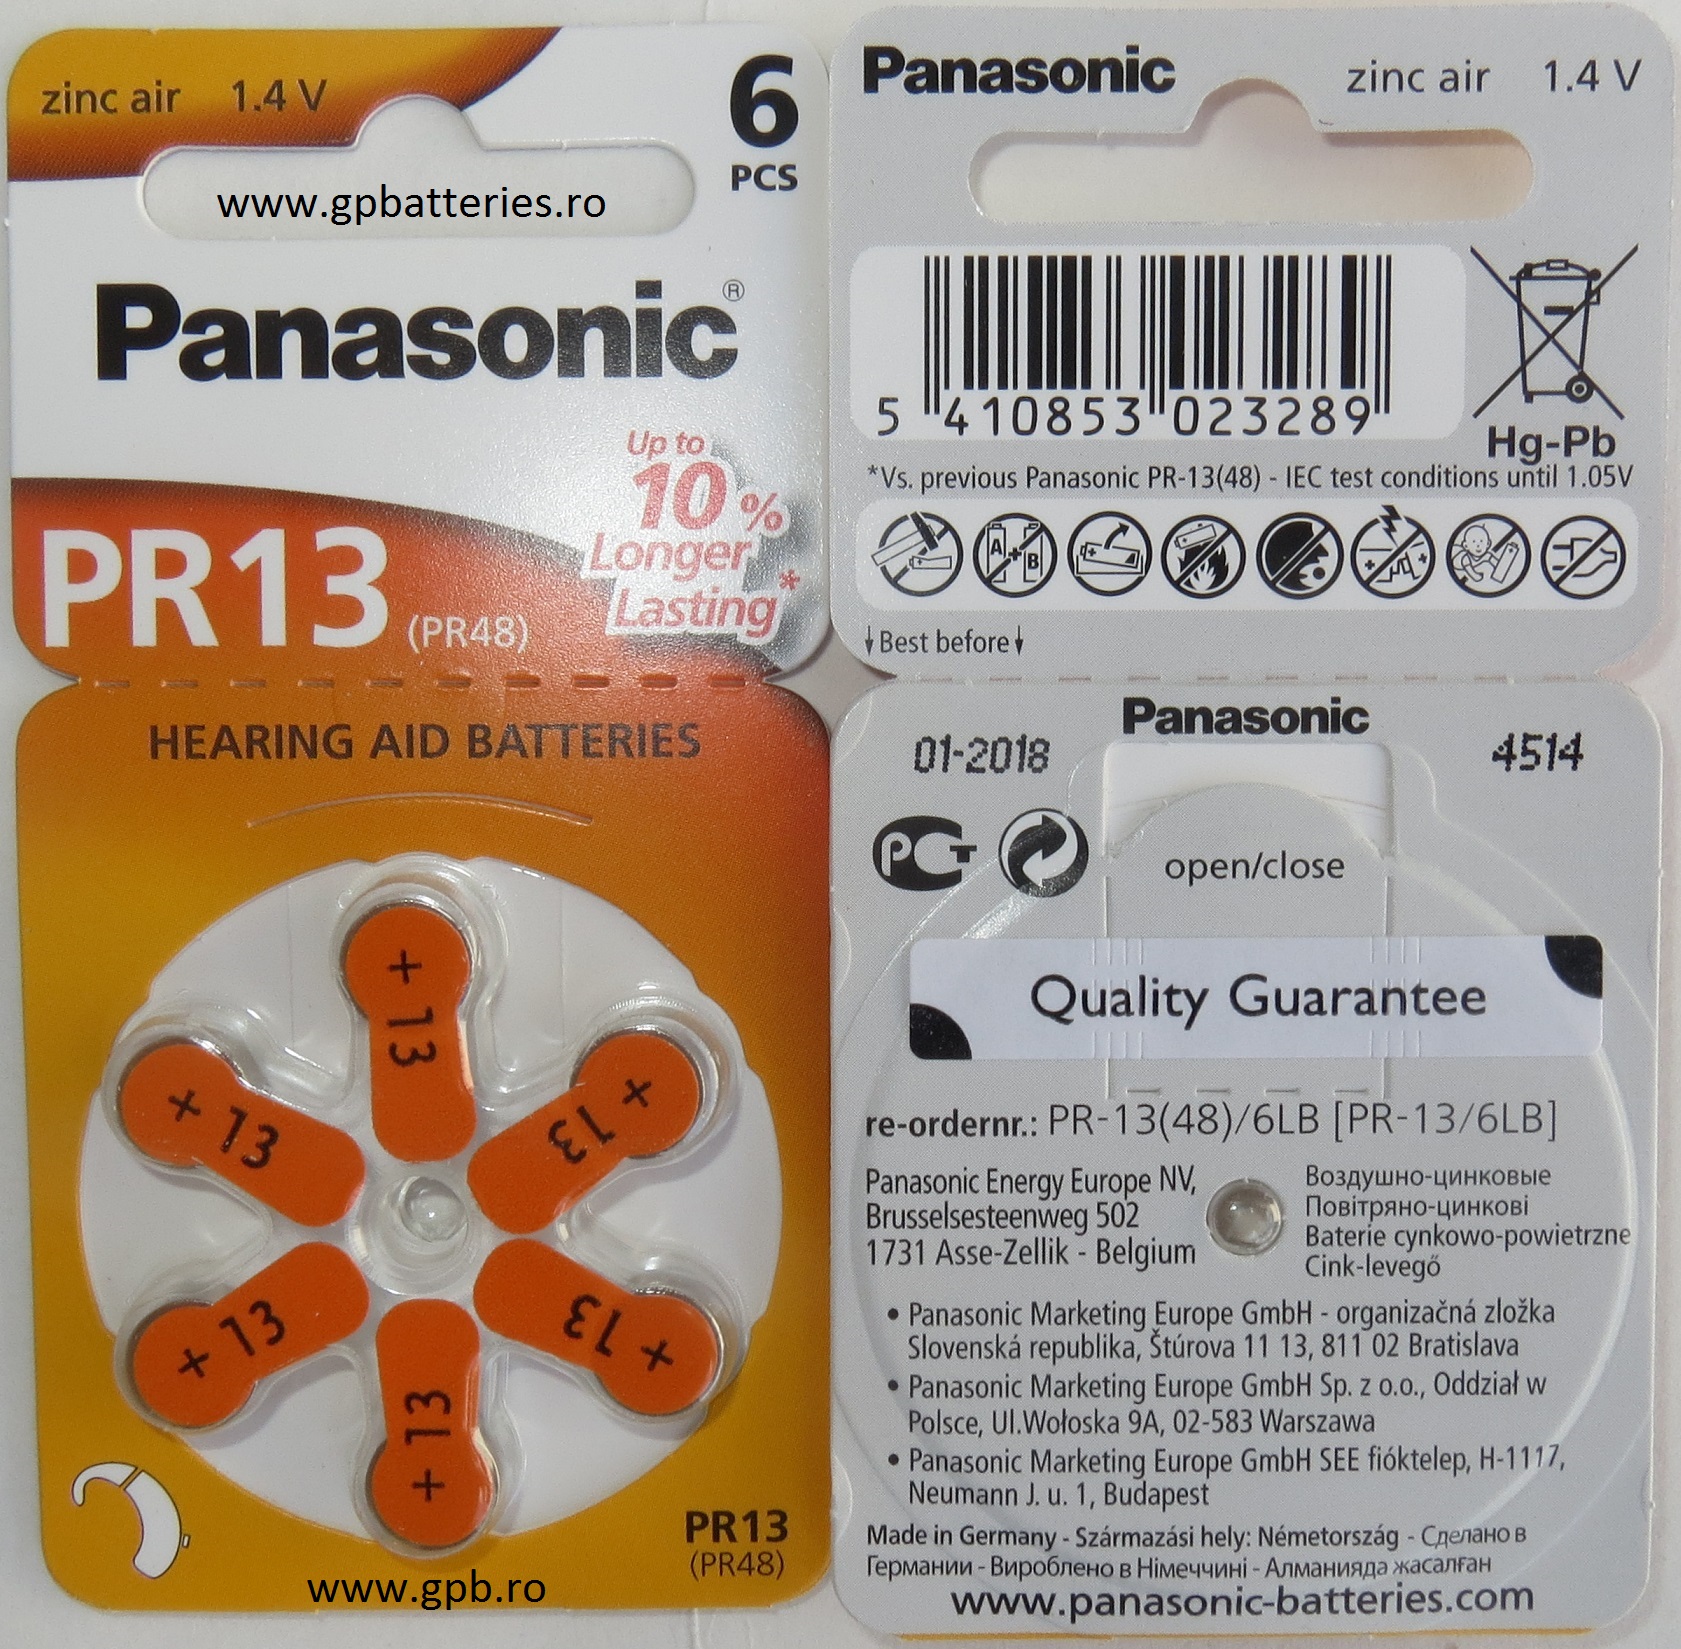 Panasonic baterie zinc-aer ZA13